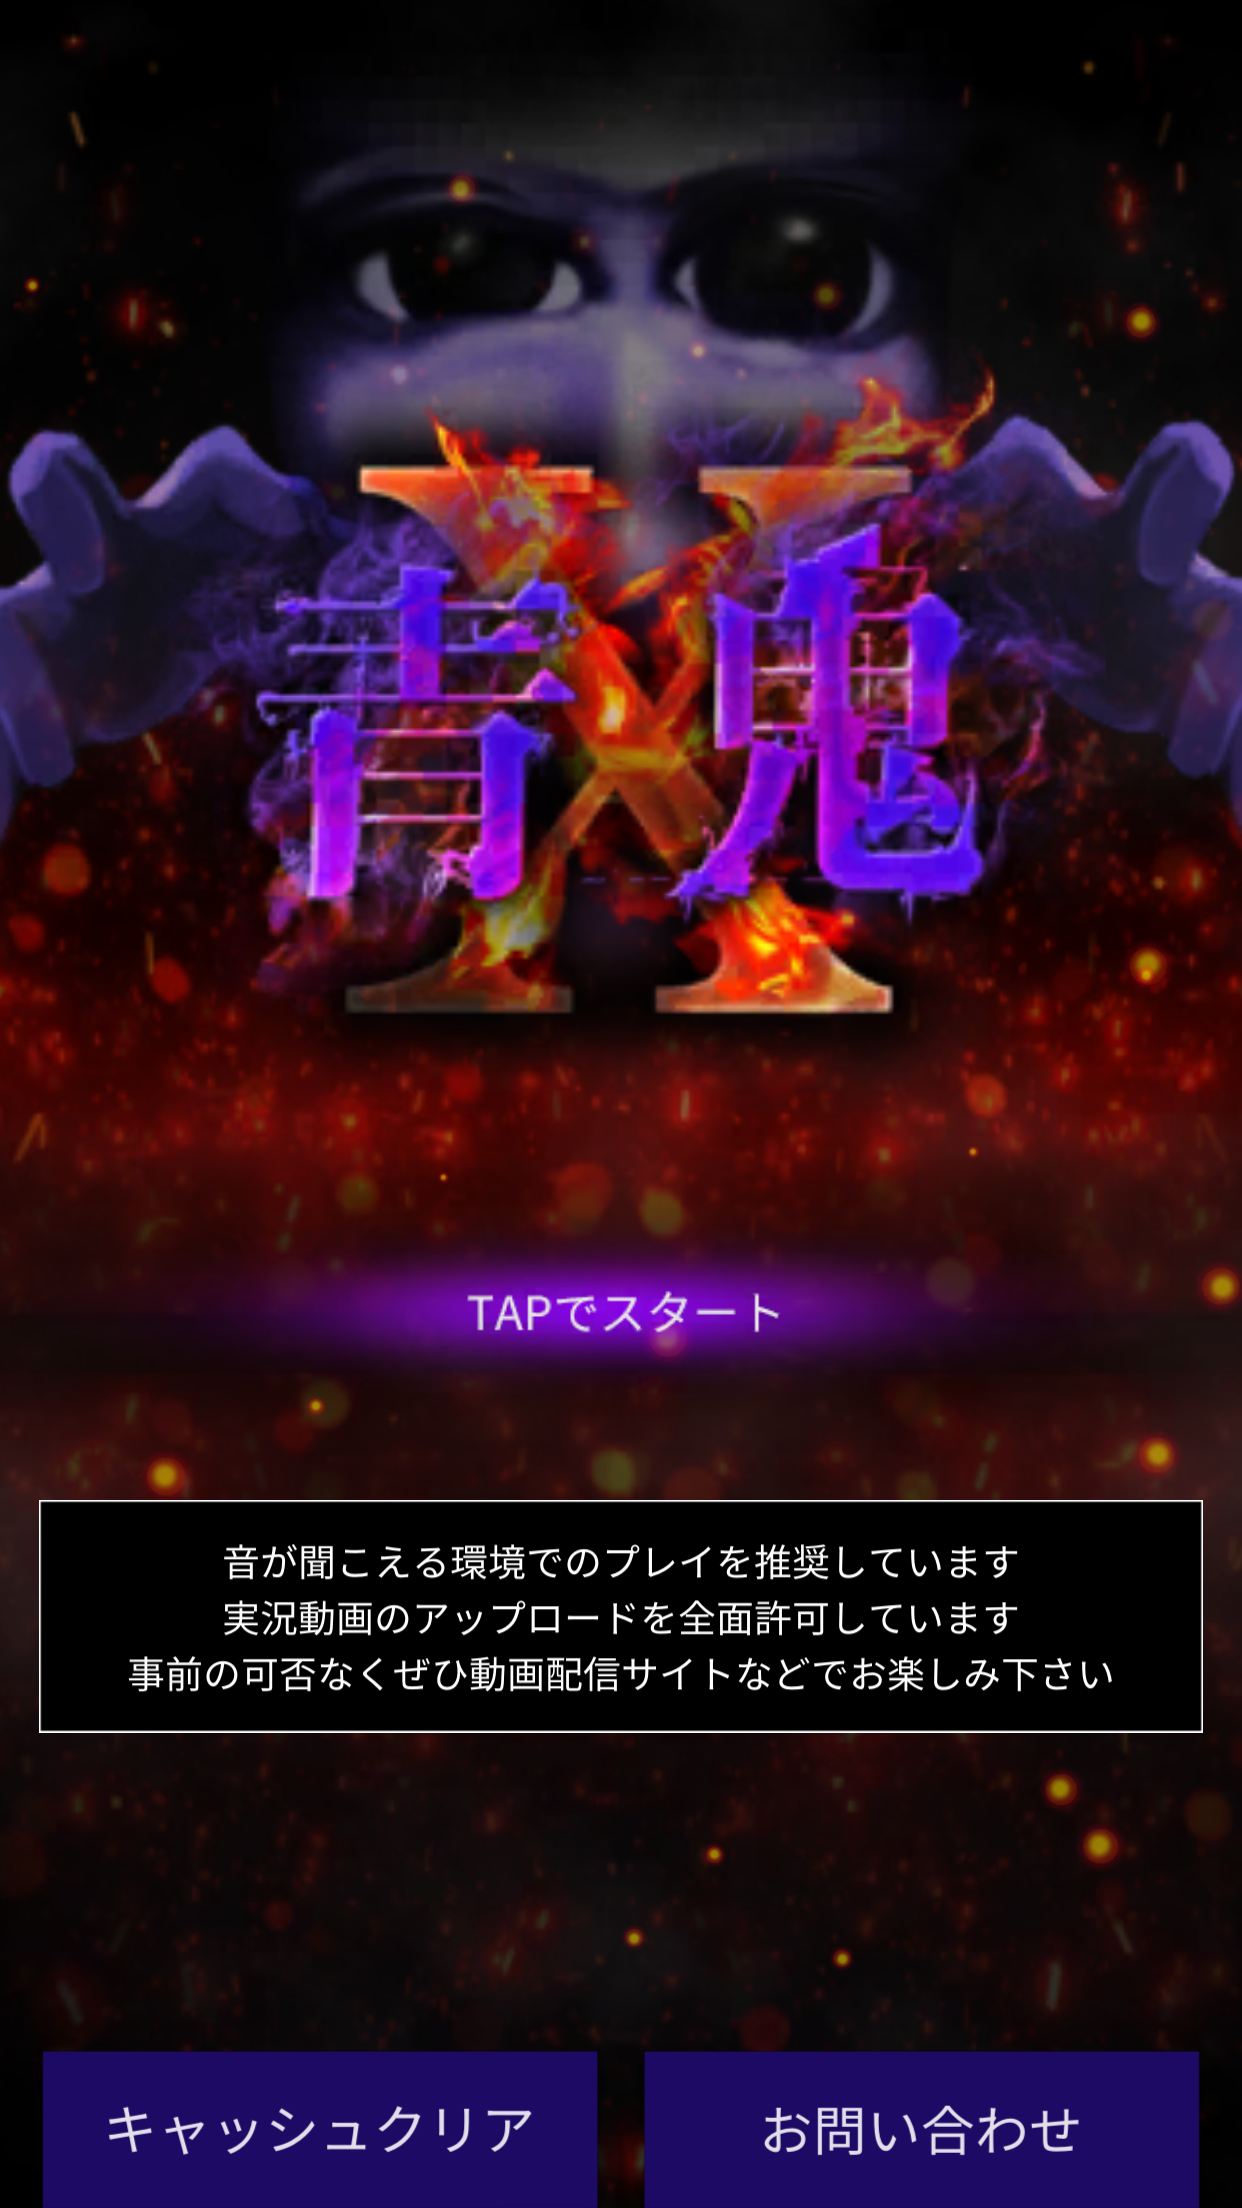 Ao Oni Online 4 versione mobile Android iOS apk scarica gratis-TapTap